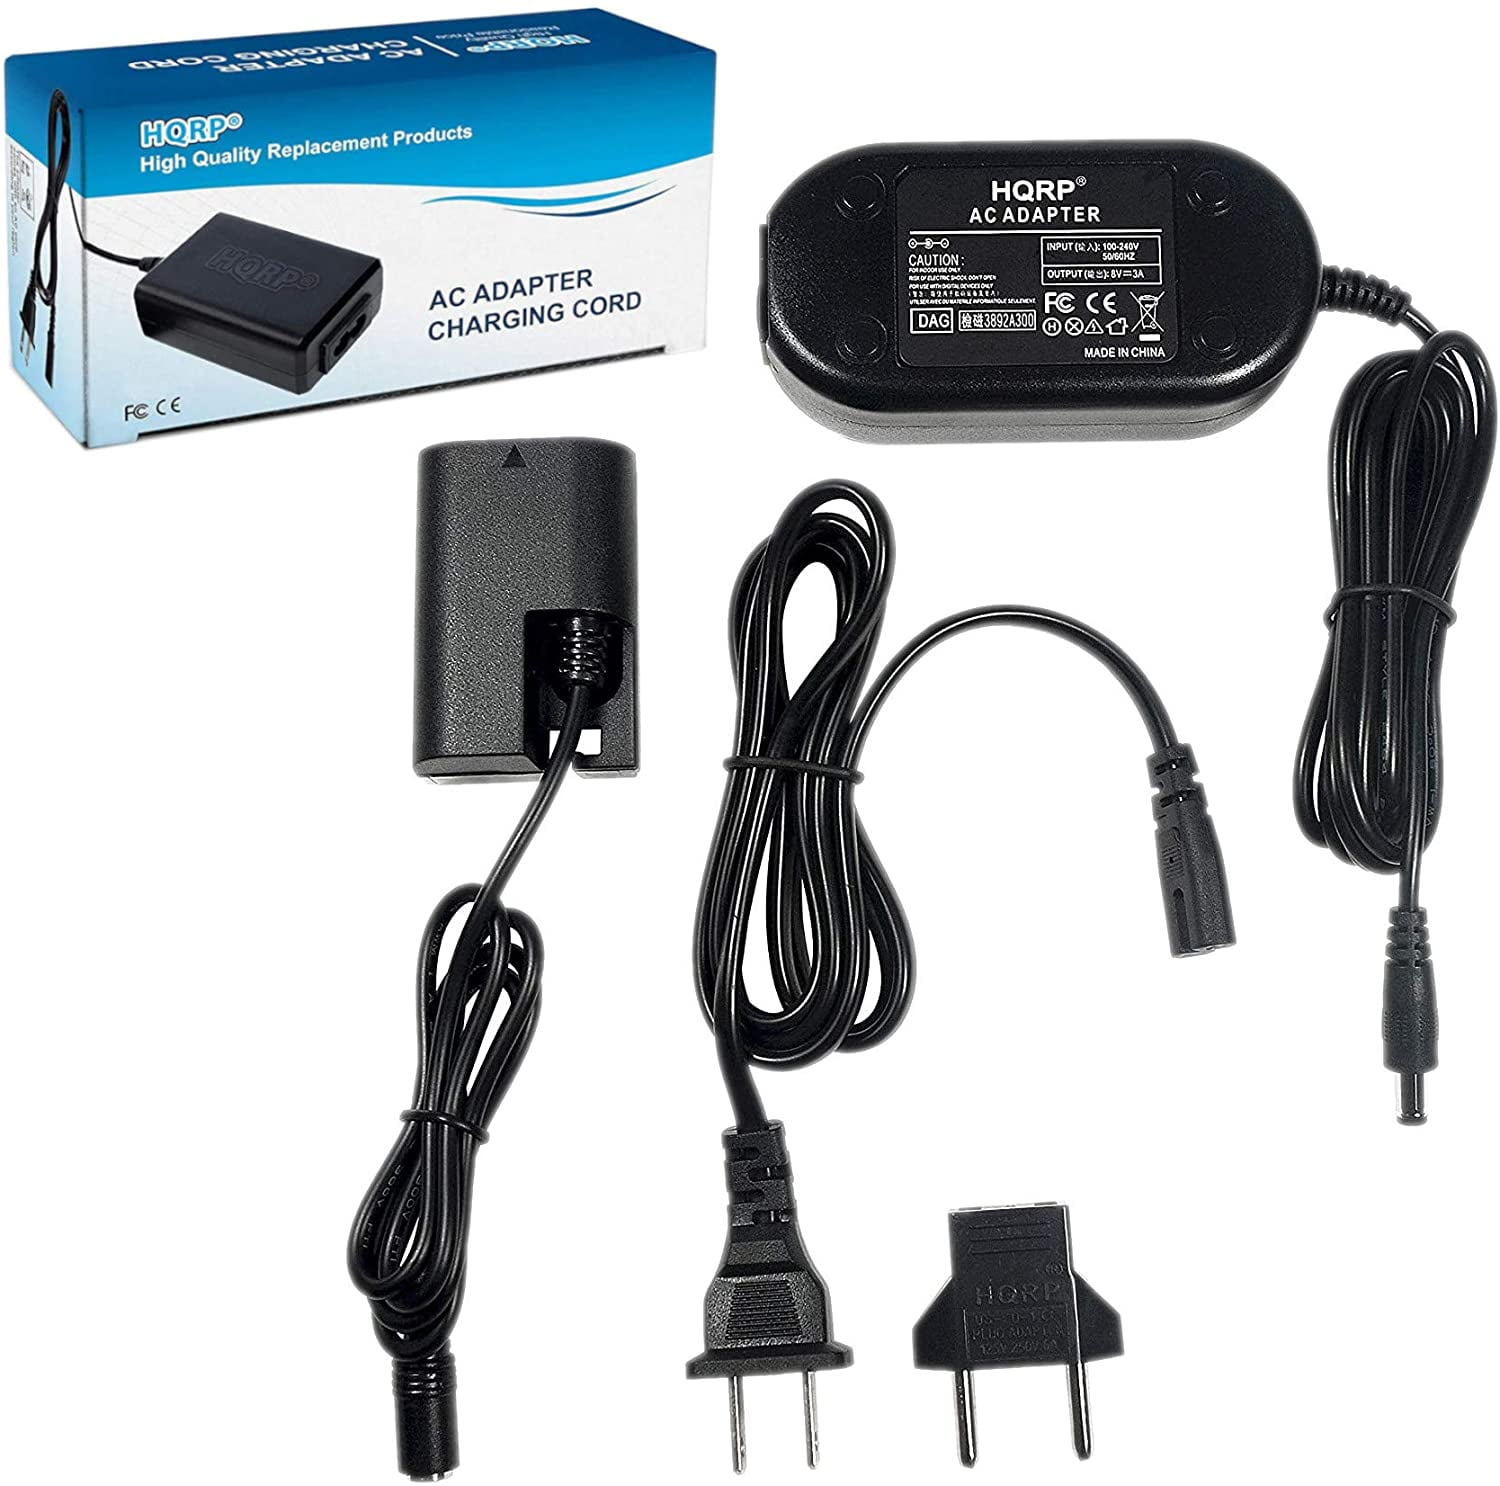 LEAD FOR PC AND MAC SONY  NEX-5C,NEX-5CA CAMERA USB DATA SYNC CABLE 